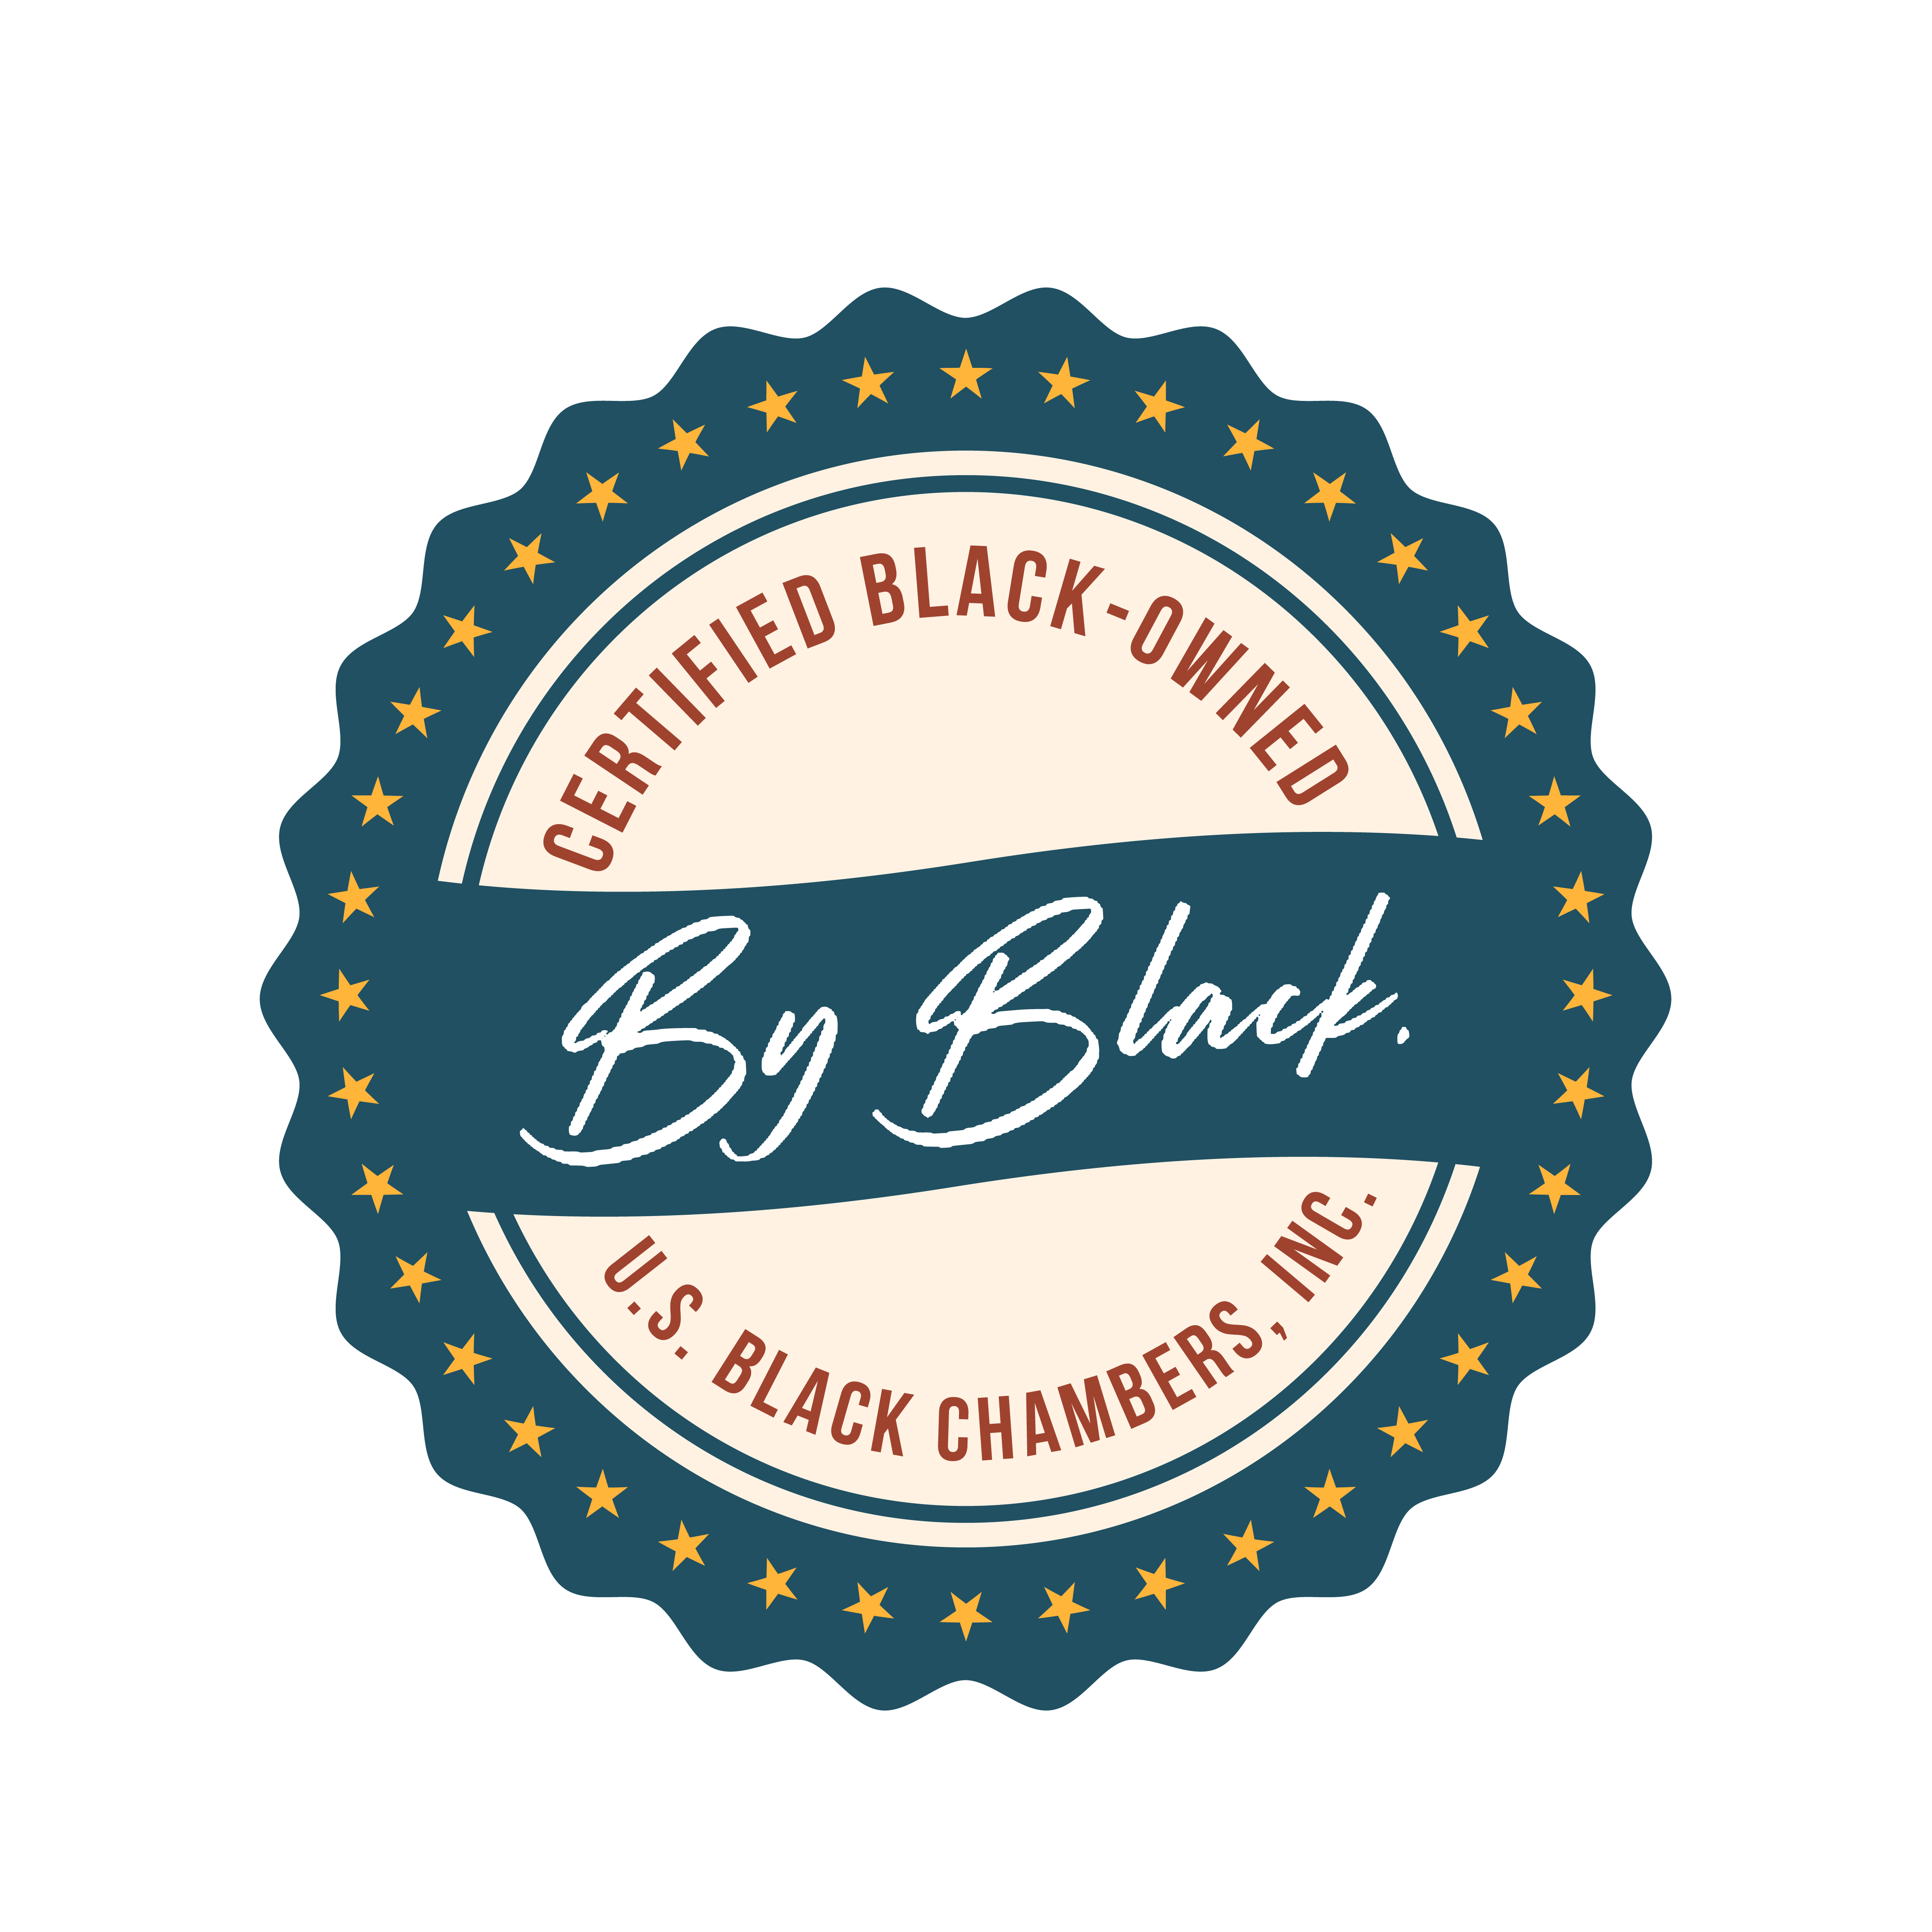 The ByBlack Badge